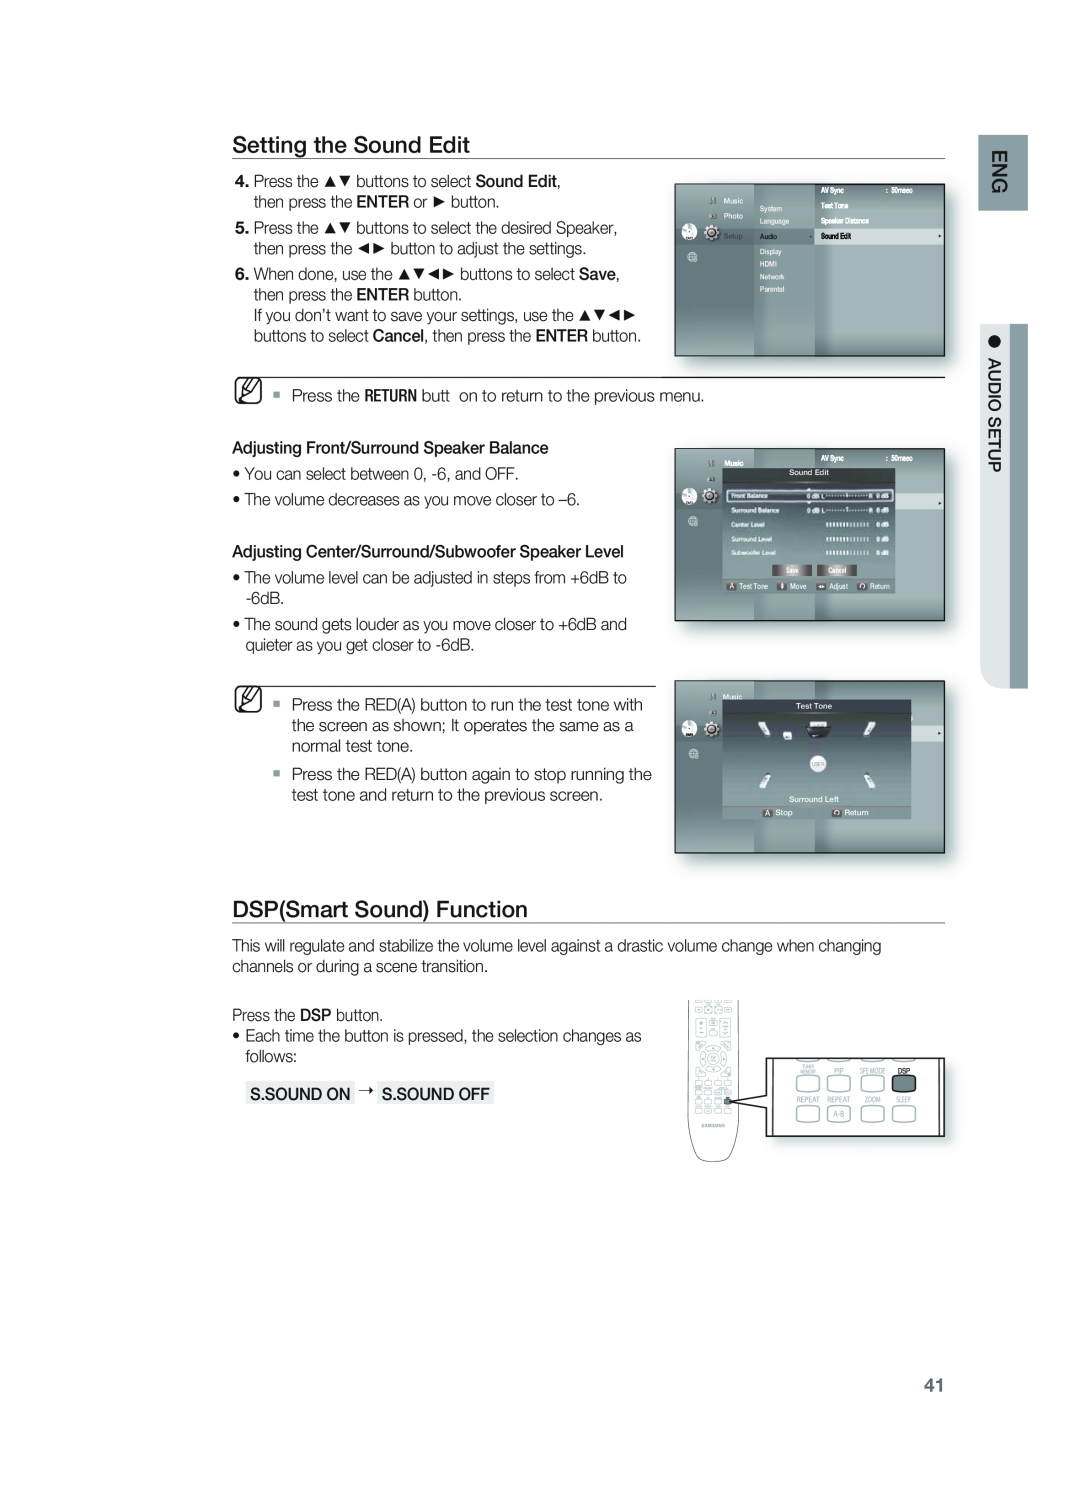 Samsung HT-BD1252, HT-BD1255 user manual DSPSmart Sound Function, Setting the Sound Edit 